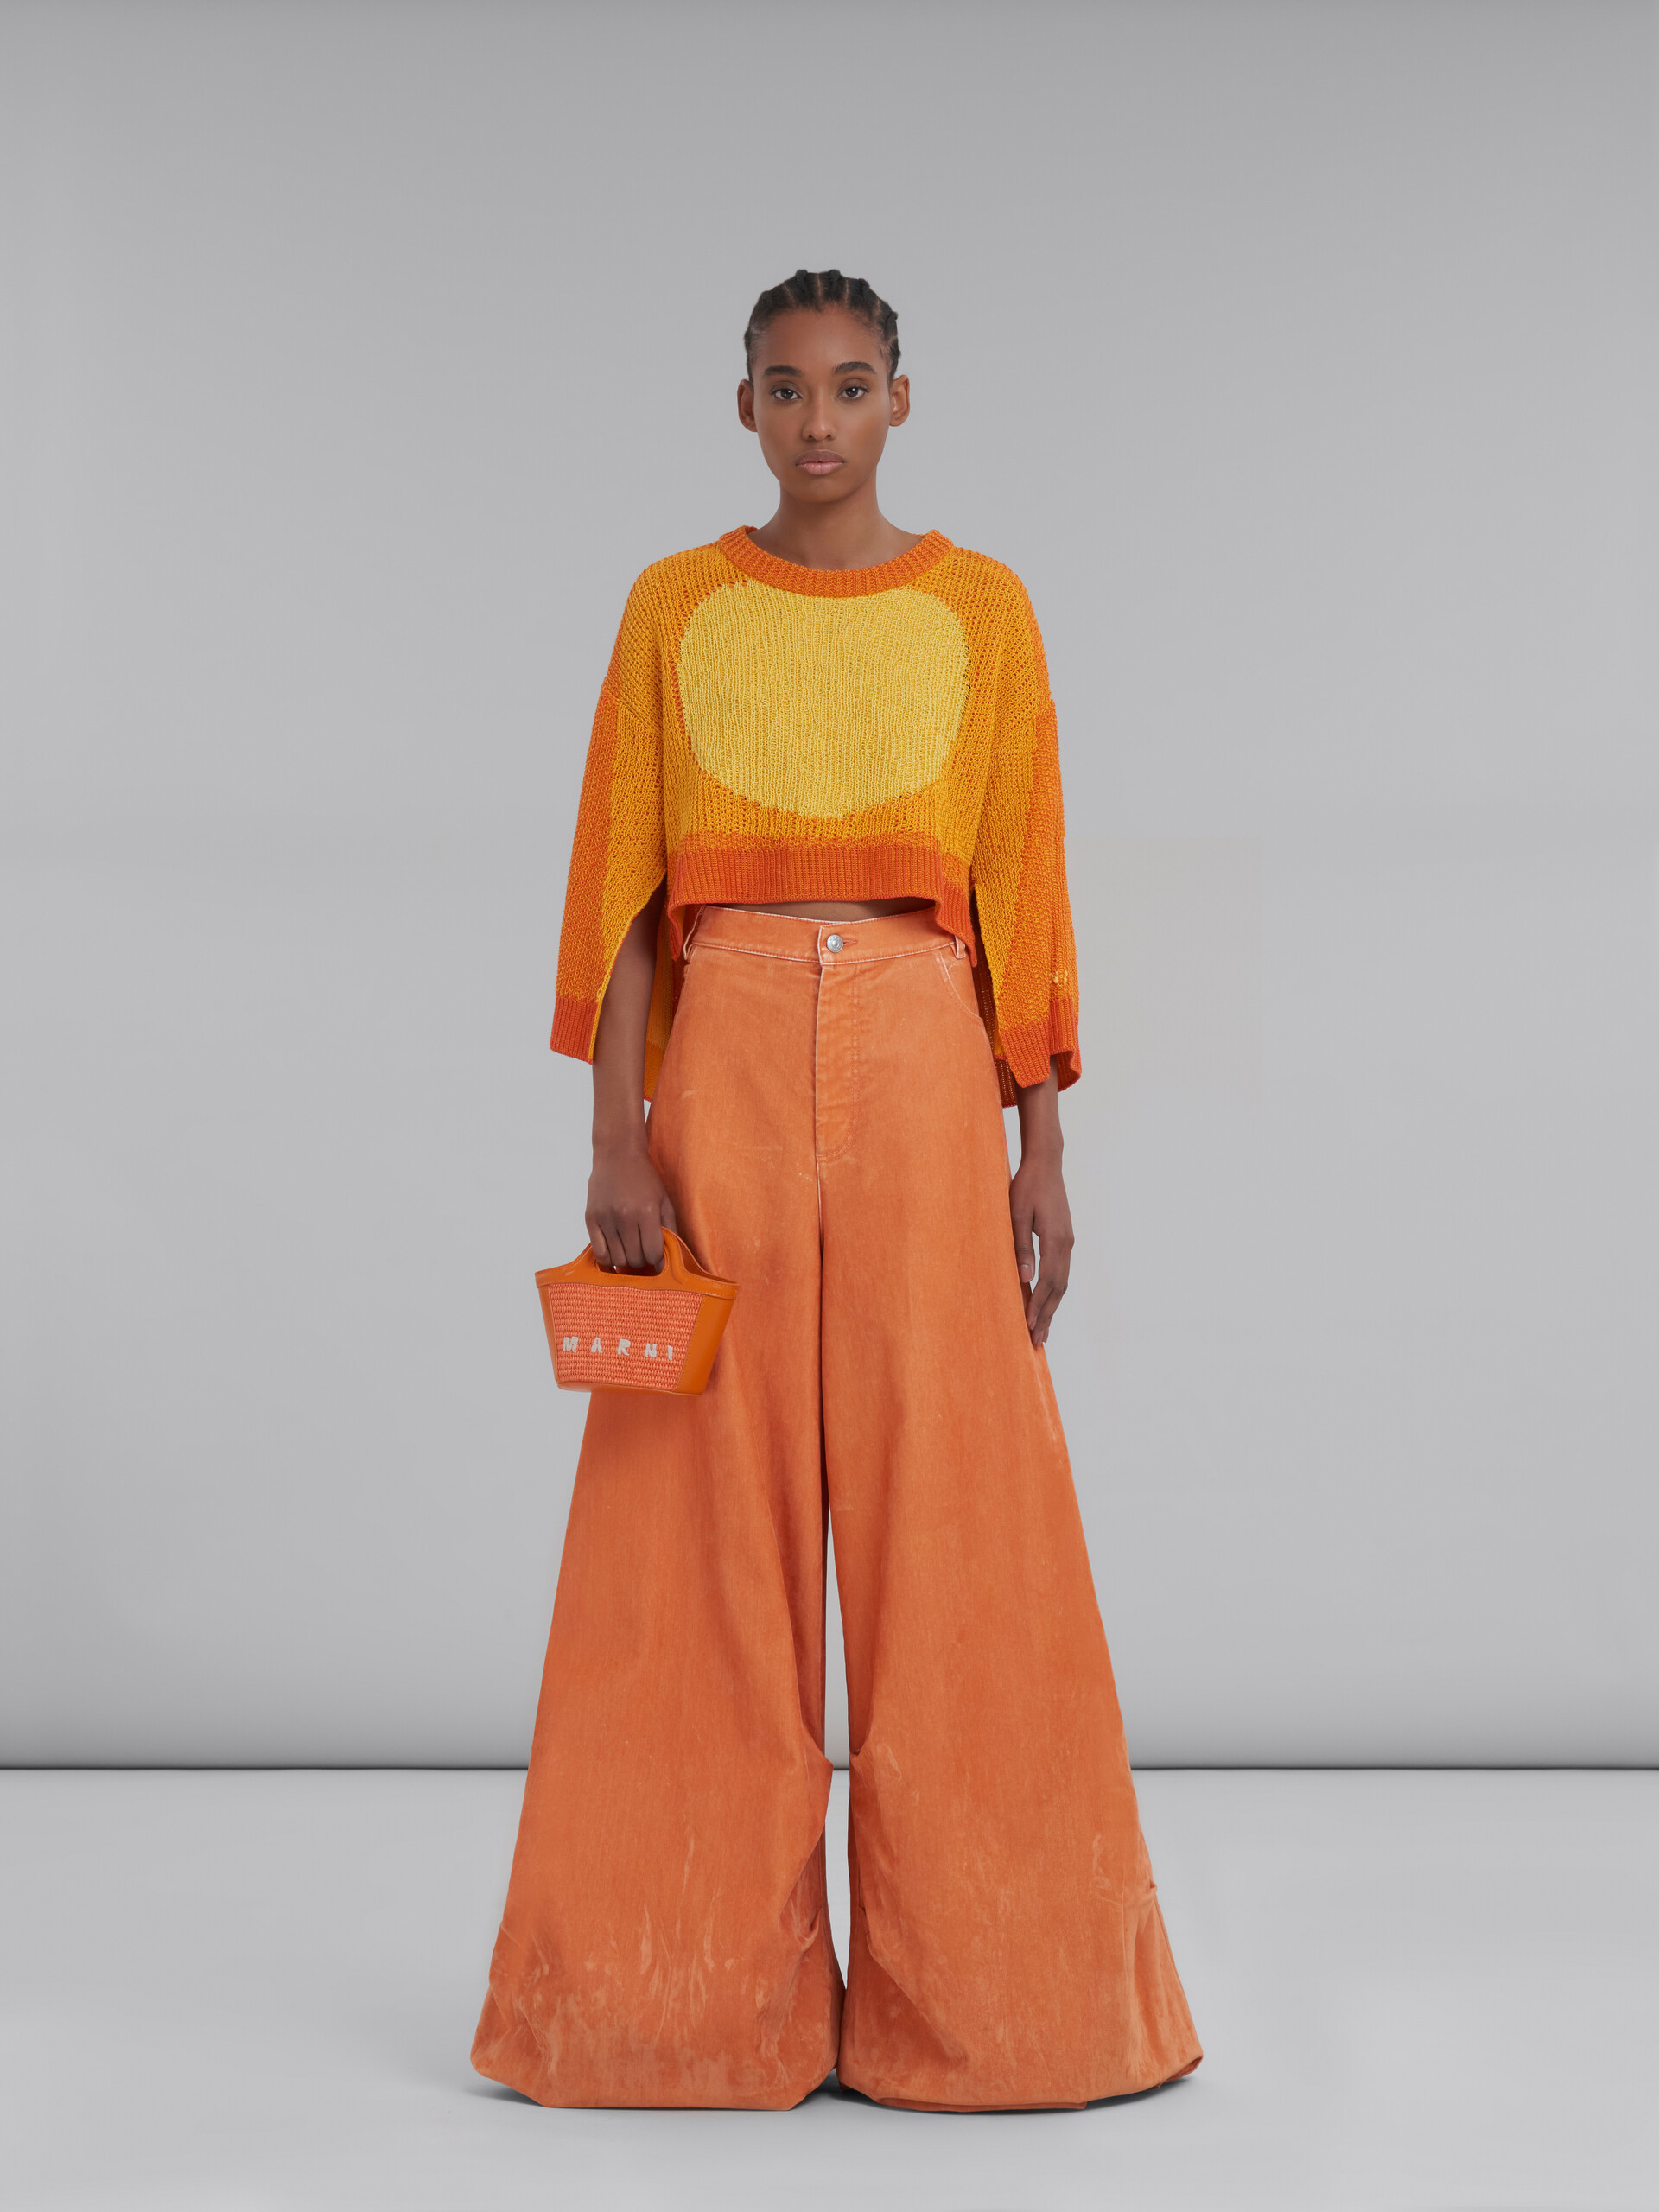 Tropicalia Micro Bag in orange leather and raffia - Handbag - Image 2